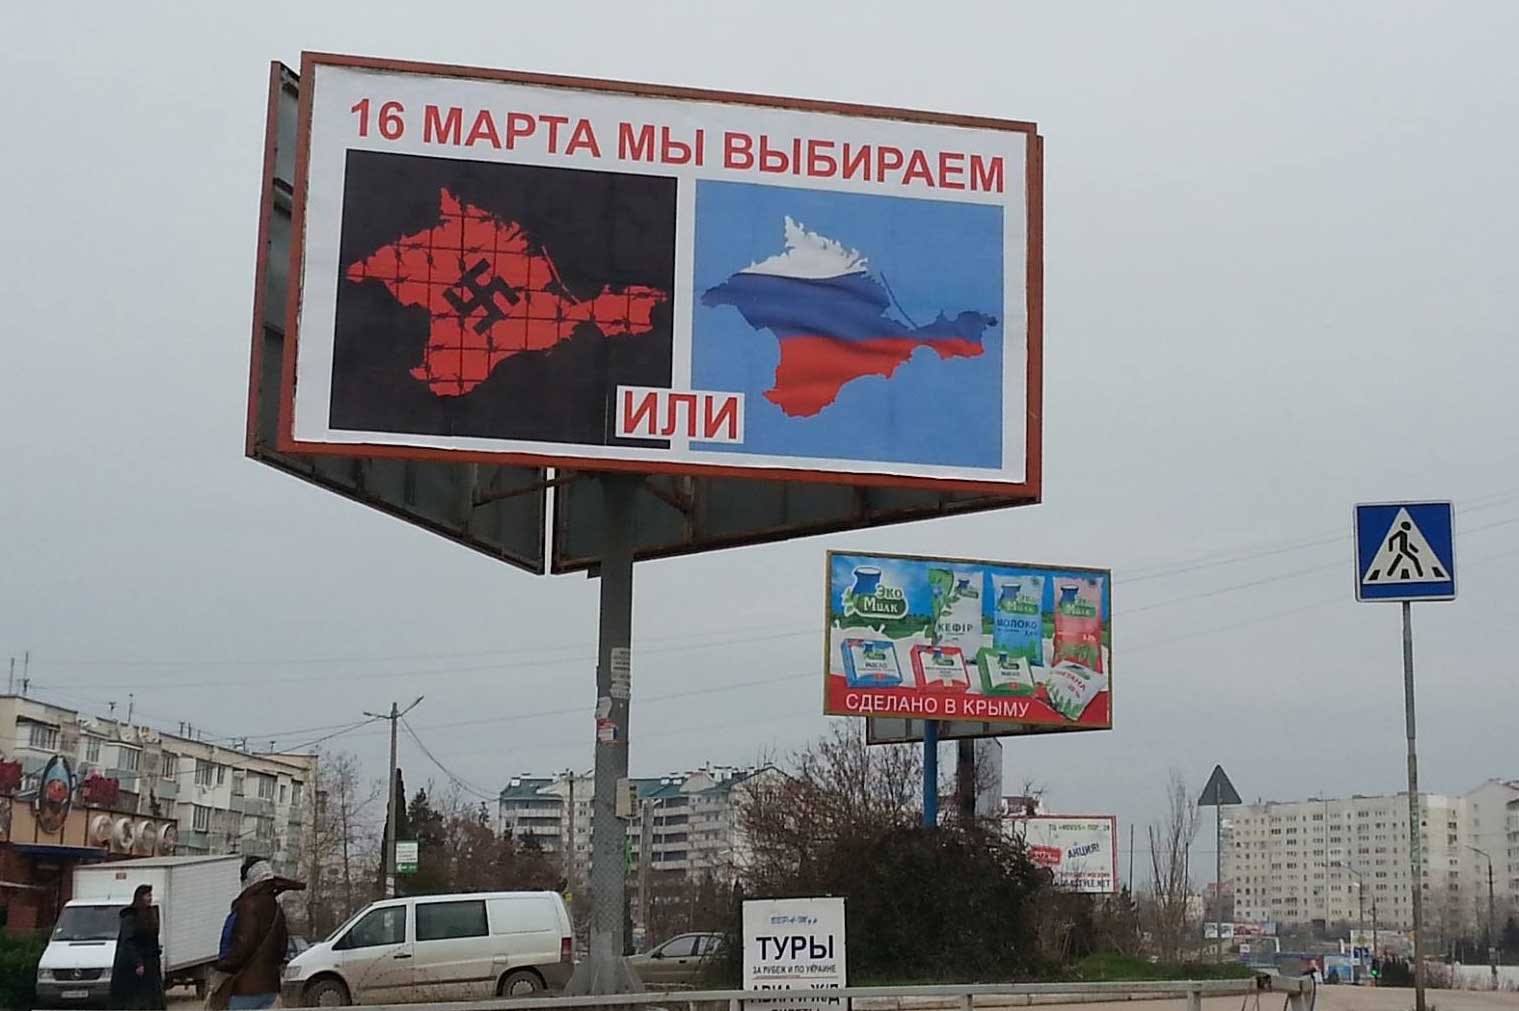 Crimean referendum billboard: 16 March We Decide